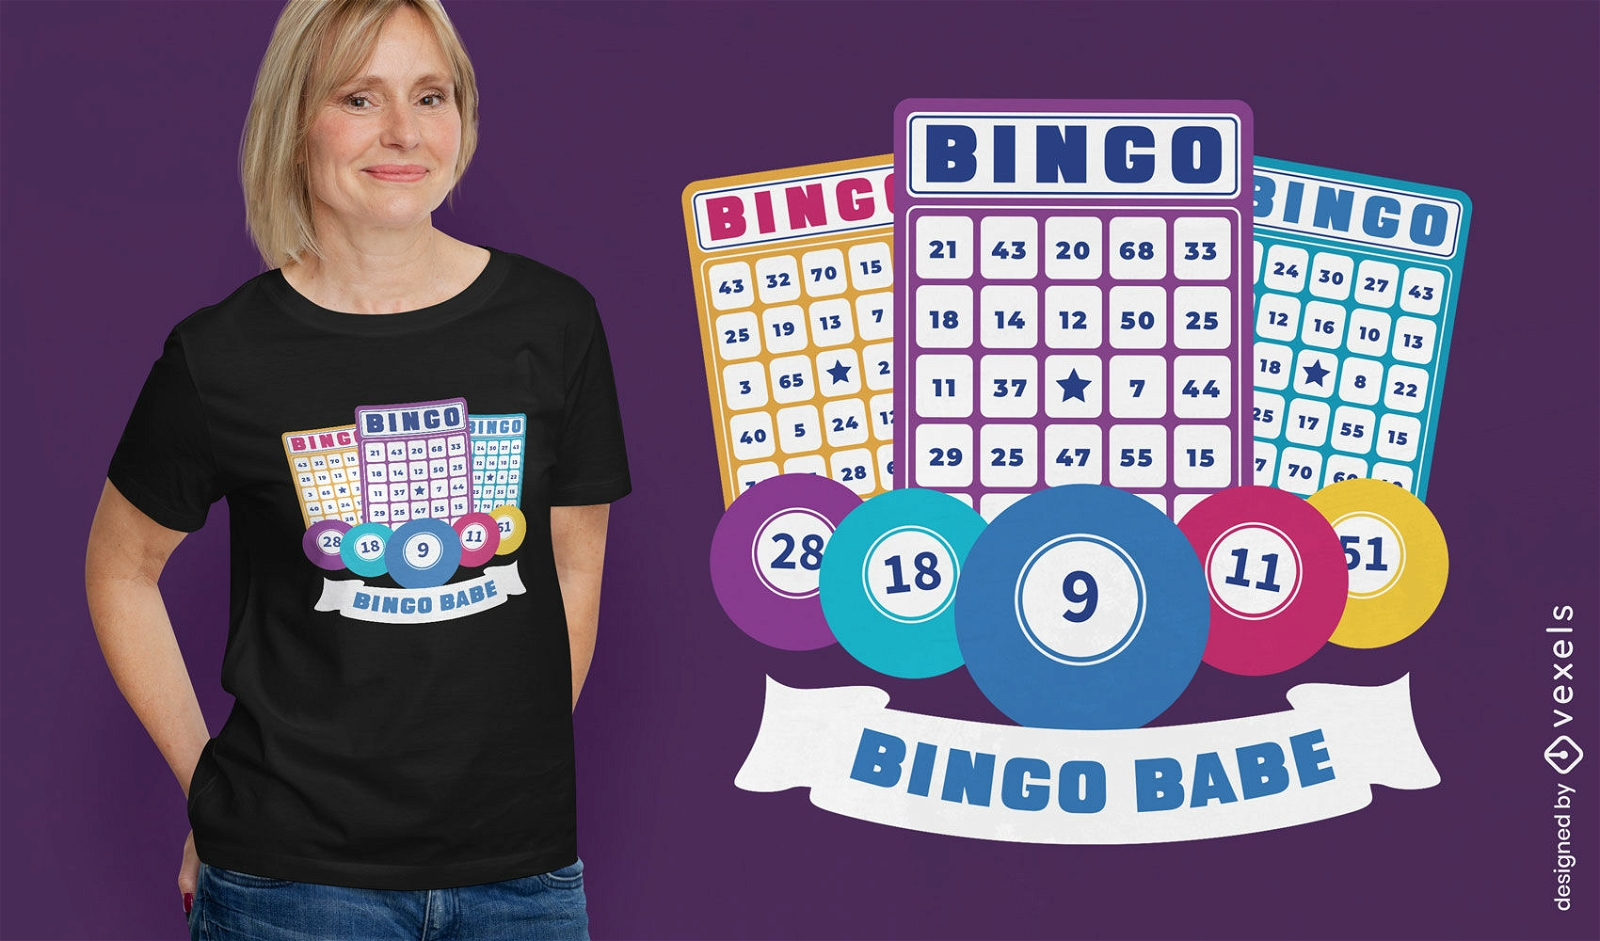 Bingo Cards game t-shirt design